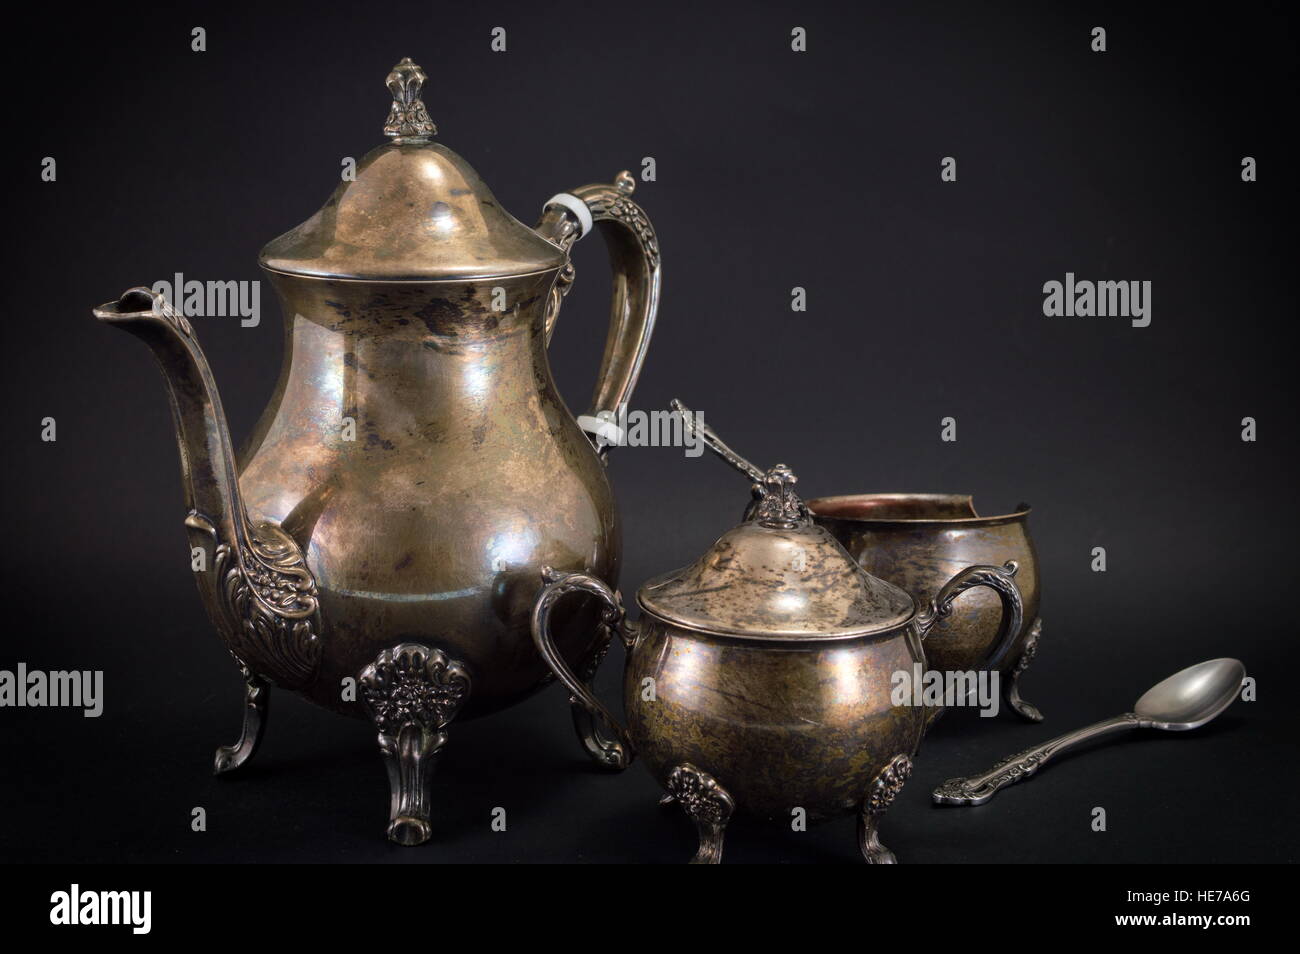 Old silver kettle utensils on black background Stock Photo